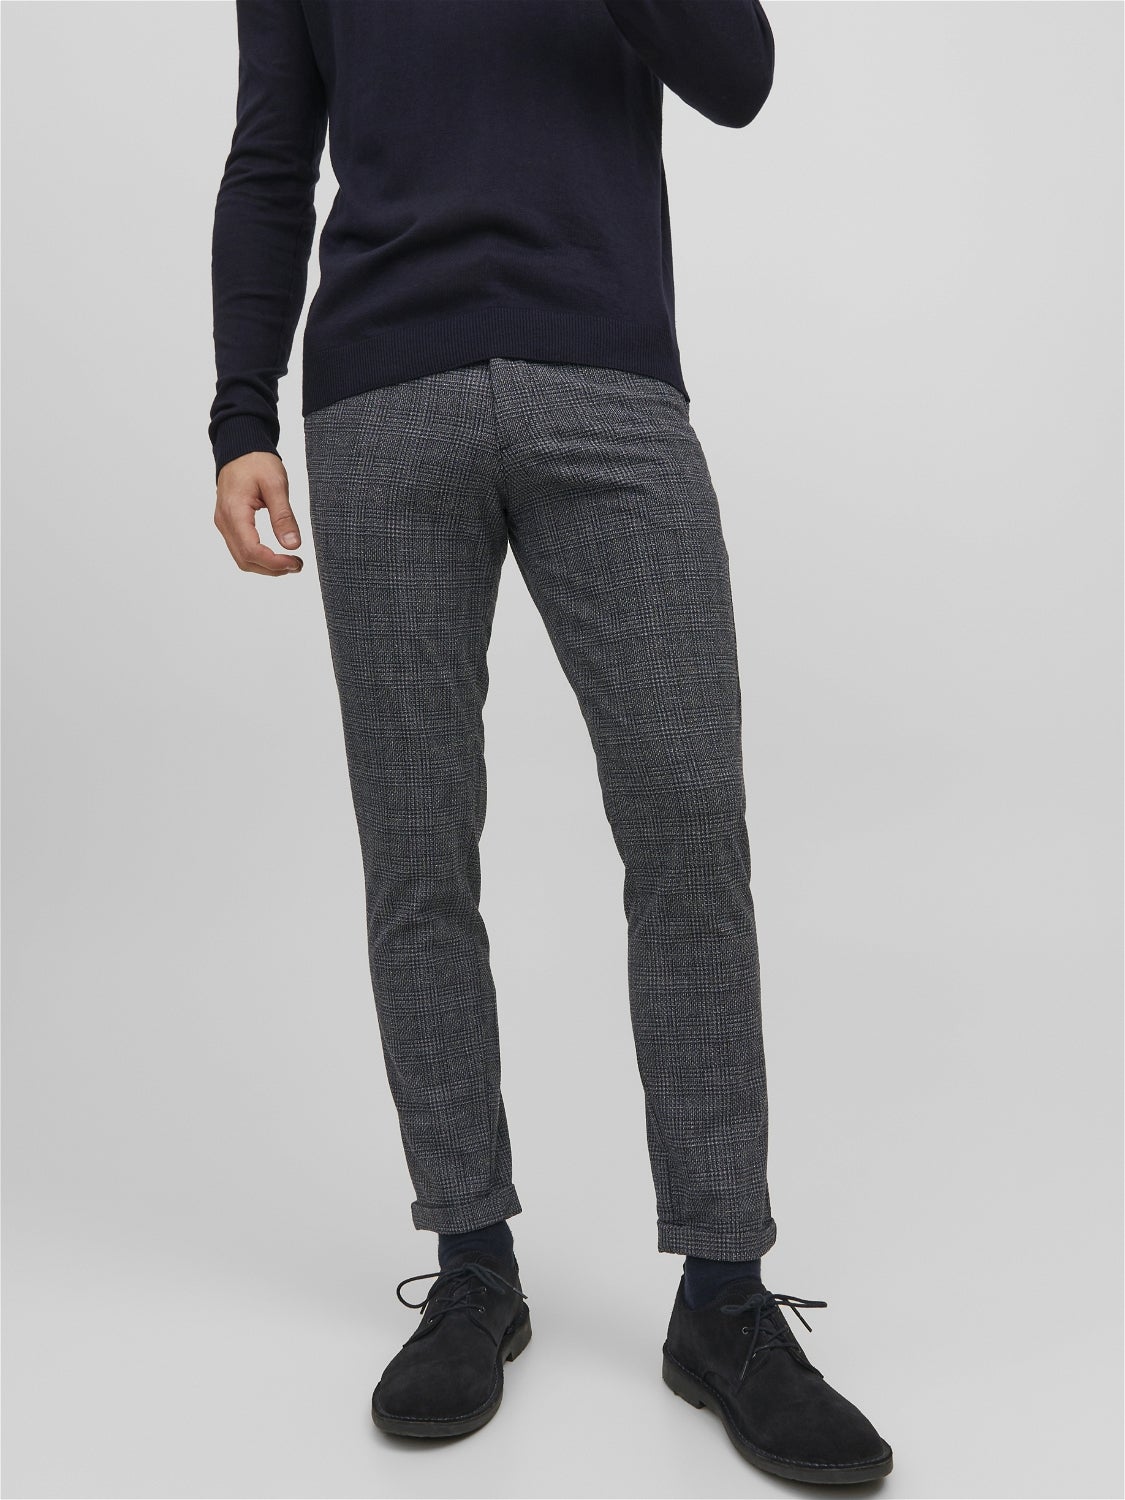 discount 55% MEN FASHION Trousers Wide-leg Gray M Jack & Jones slacks 